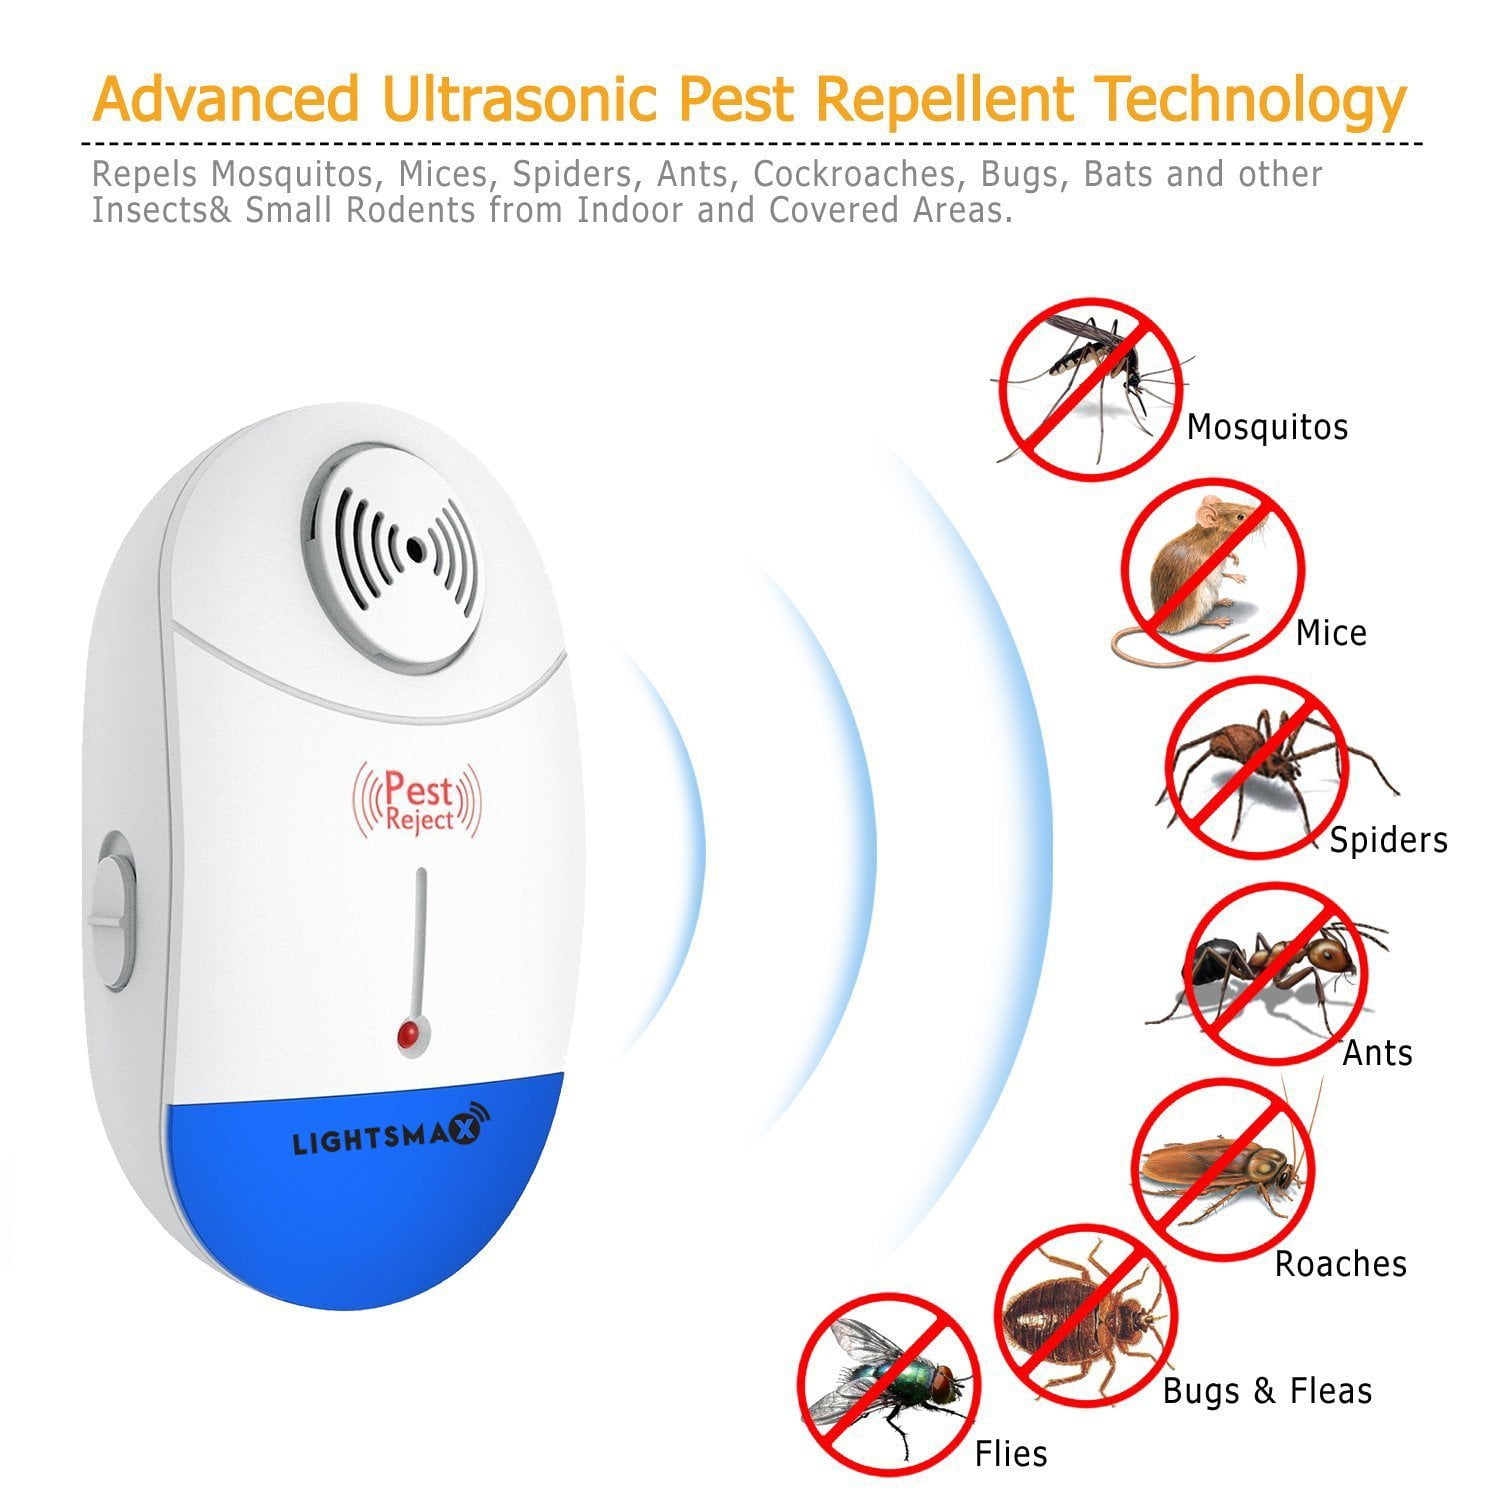 Best Mouse Repellents